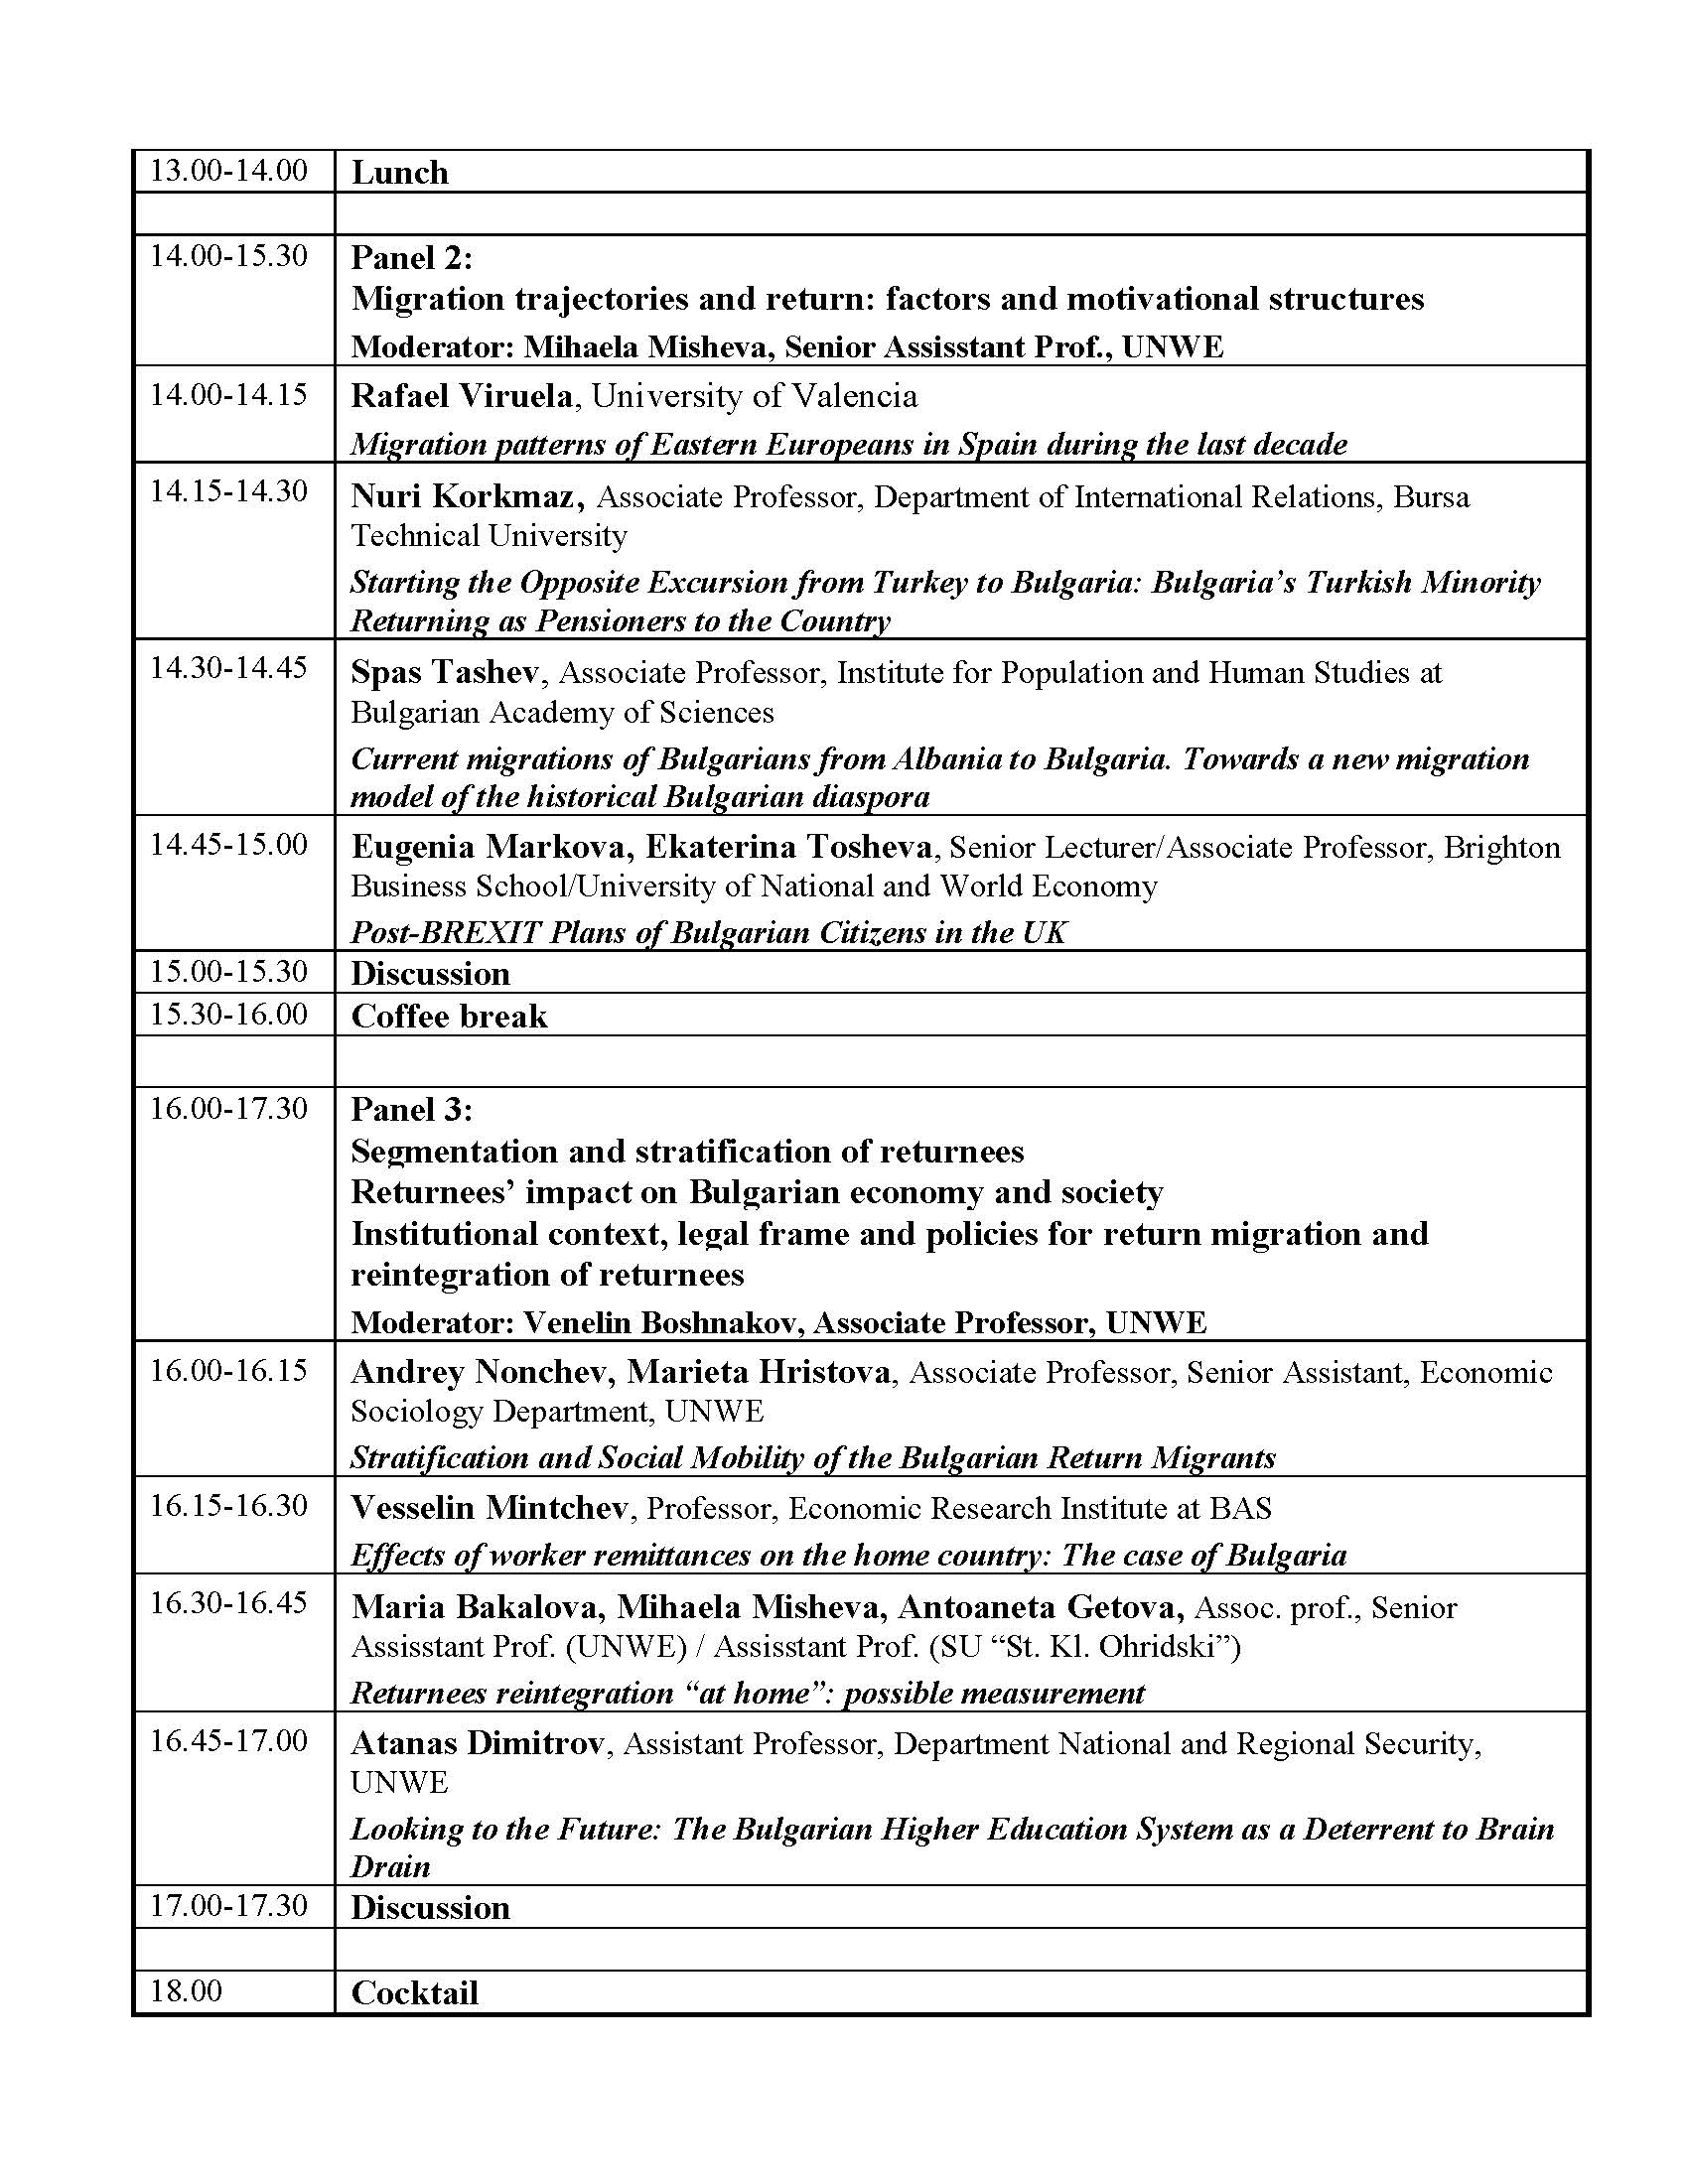 soc_602ad_Preliminary Program Conference 200220_Page_2.jpg